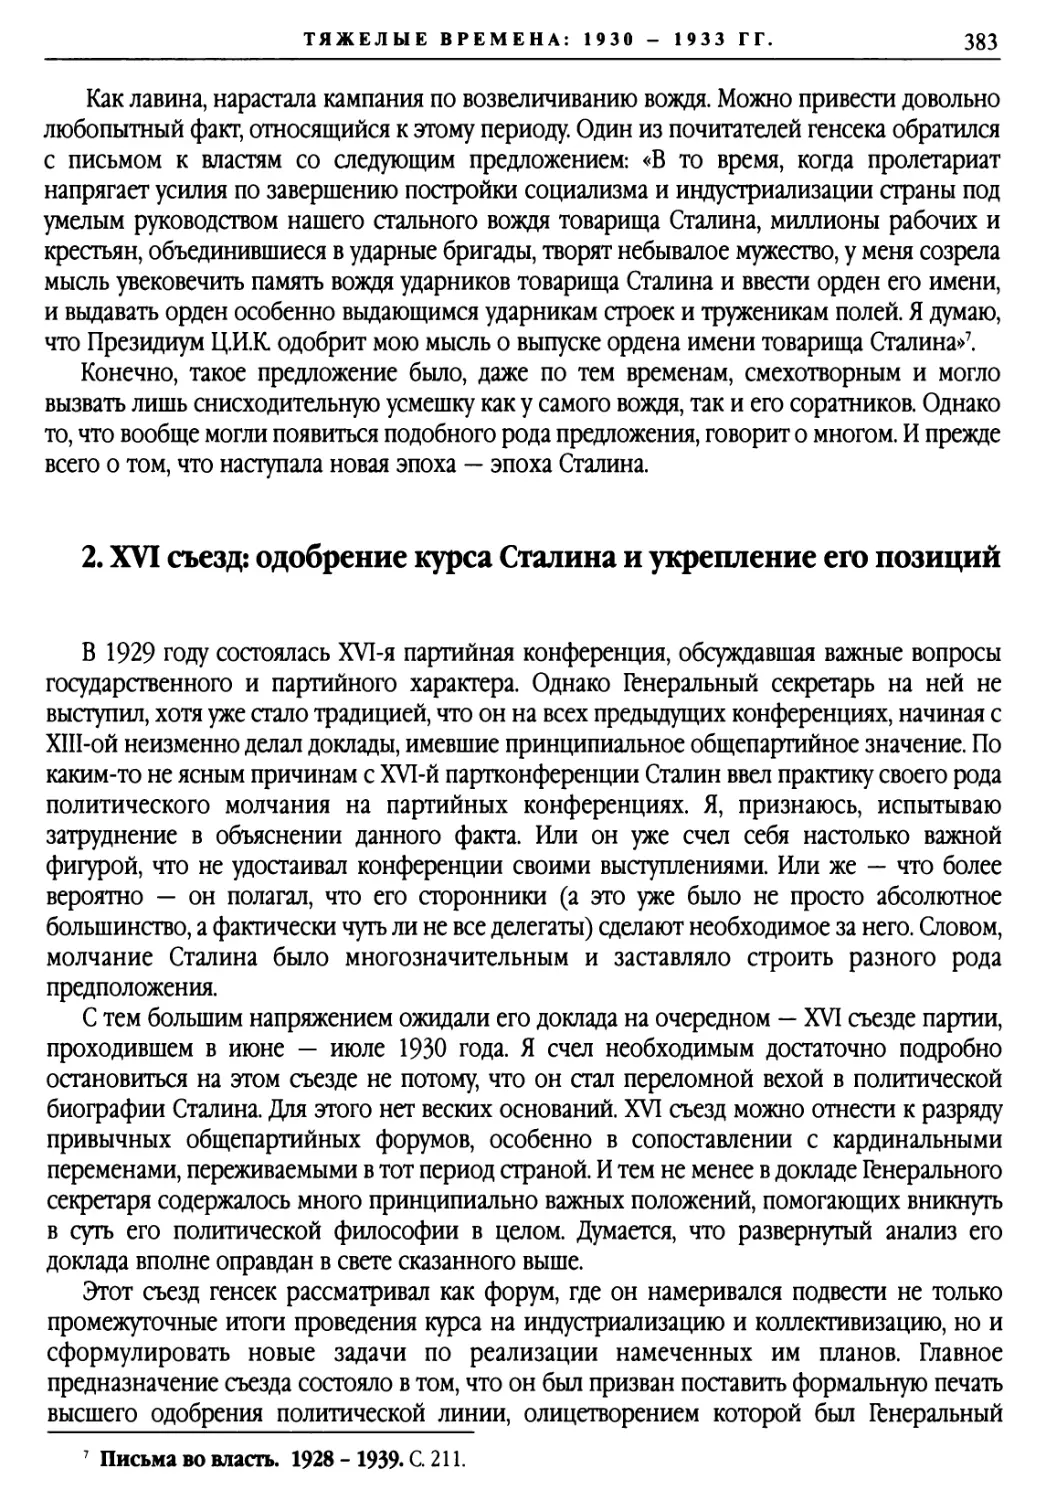 2. XVI съезда: одобрение курса Сталина и укрепление его позиций